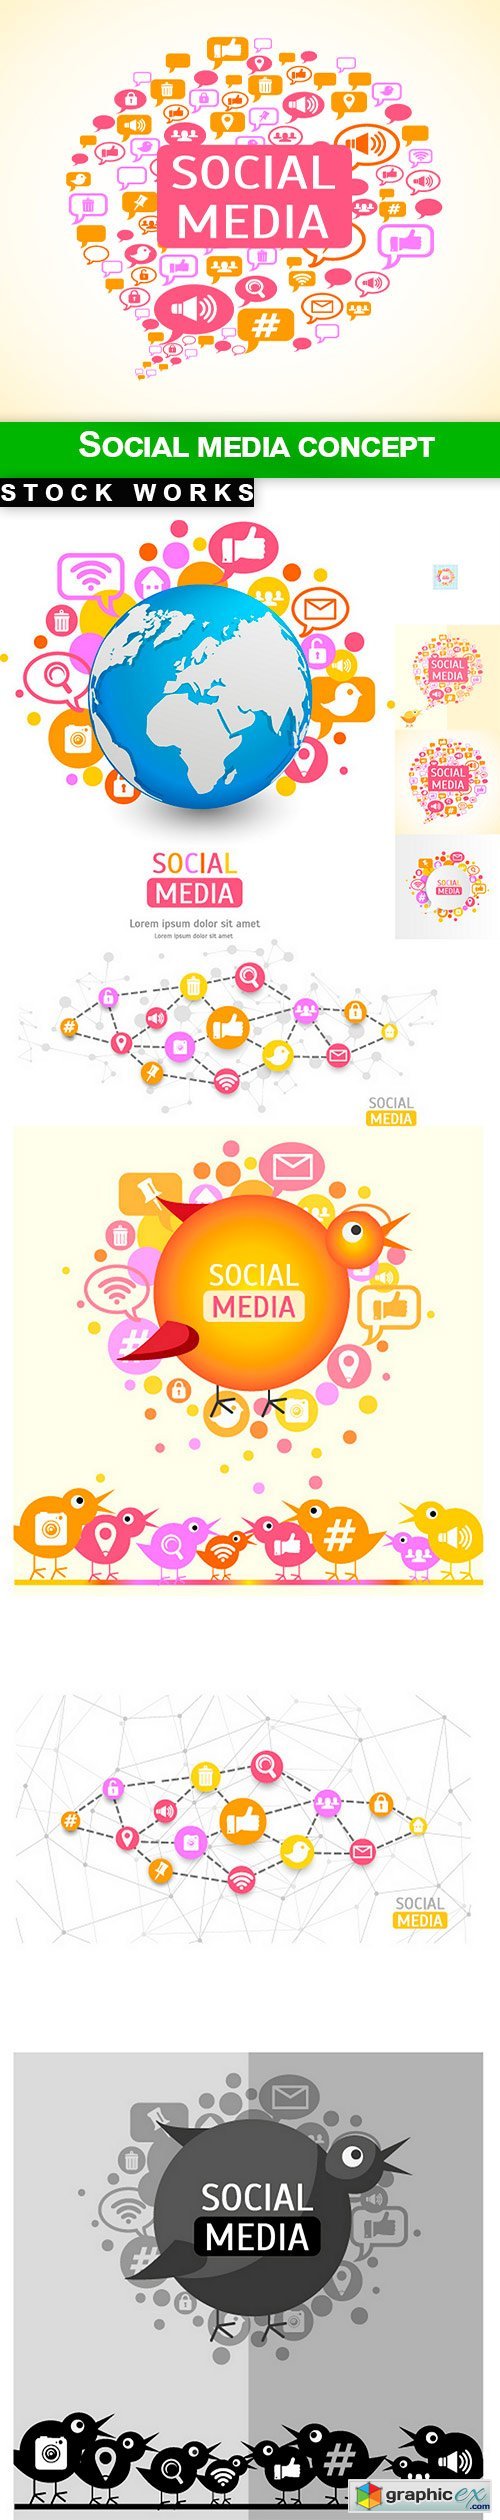 Social media concept - 9 EPS